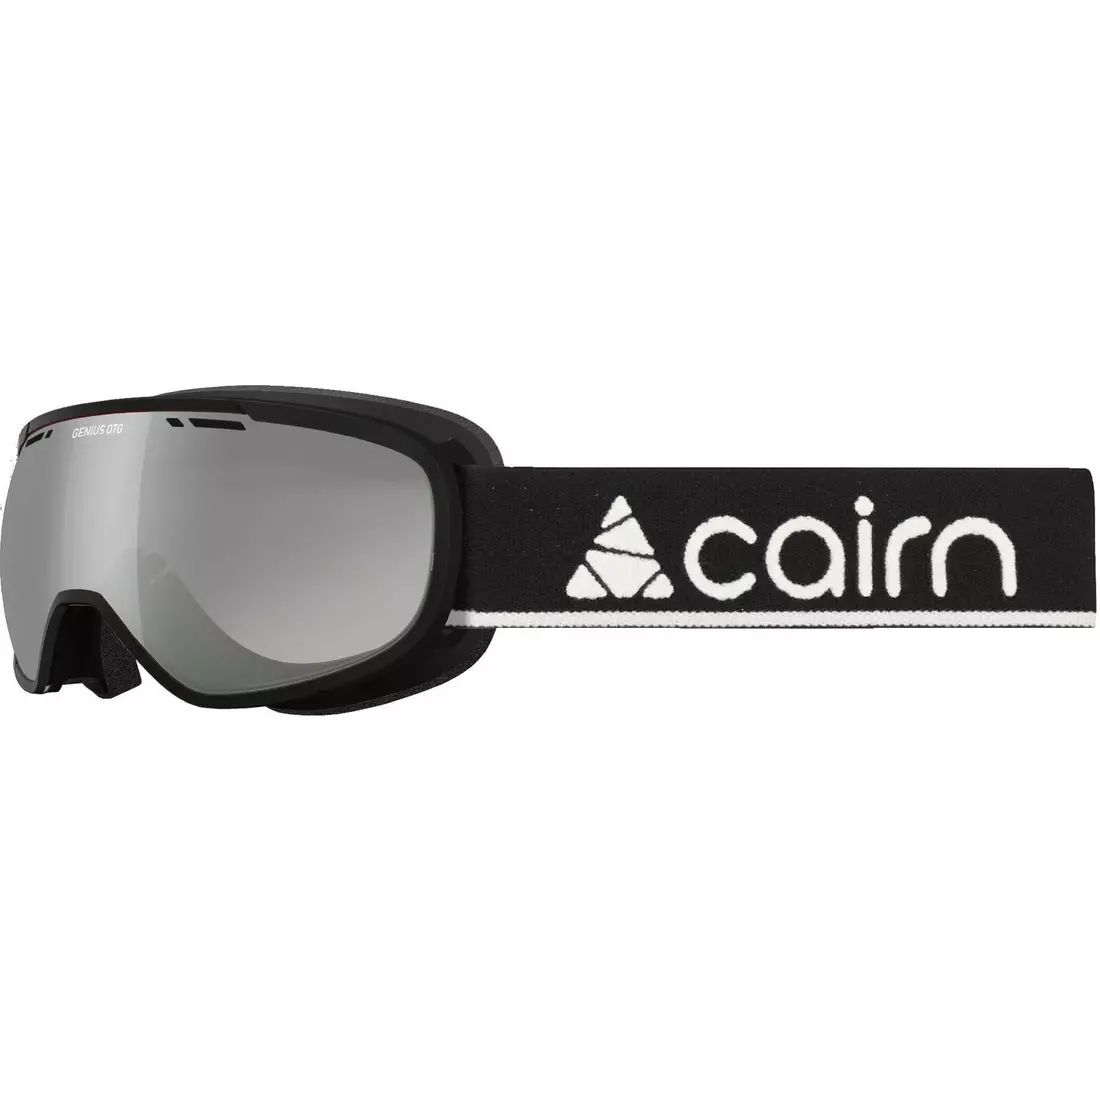 CAIRN lyžiarske/snowboardové okuliare GENIUS OTG SPX3000 black 581300802